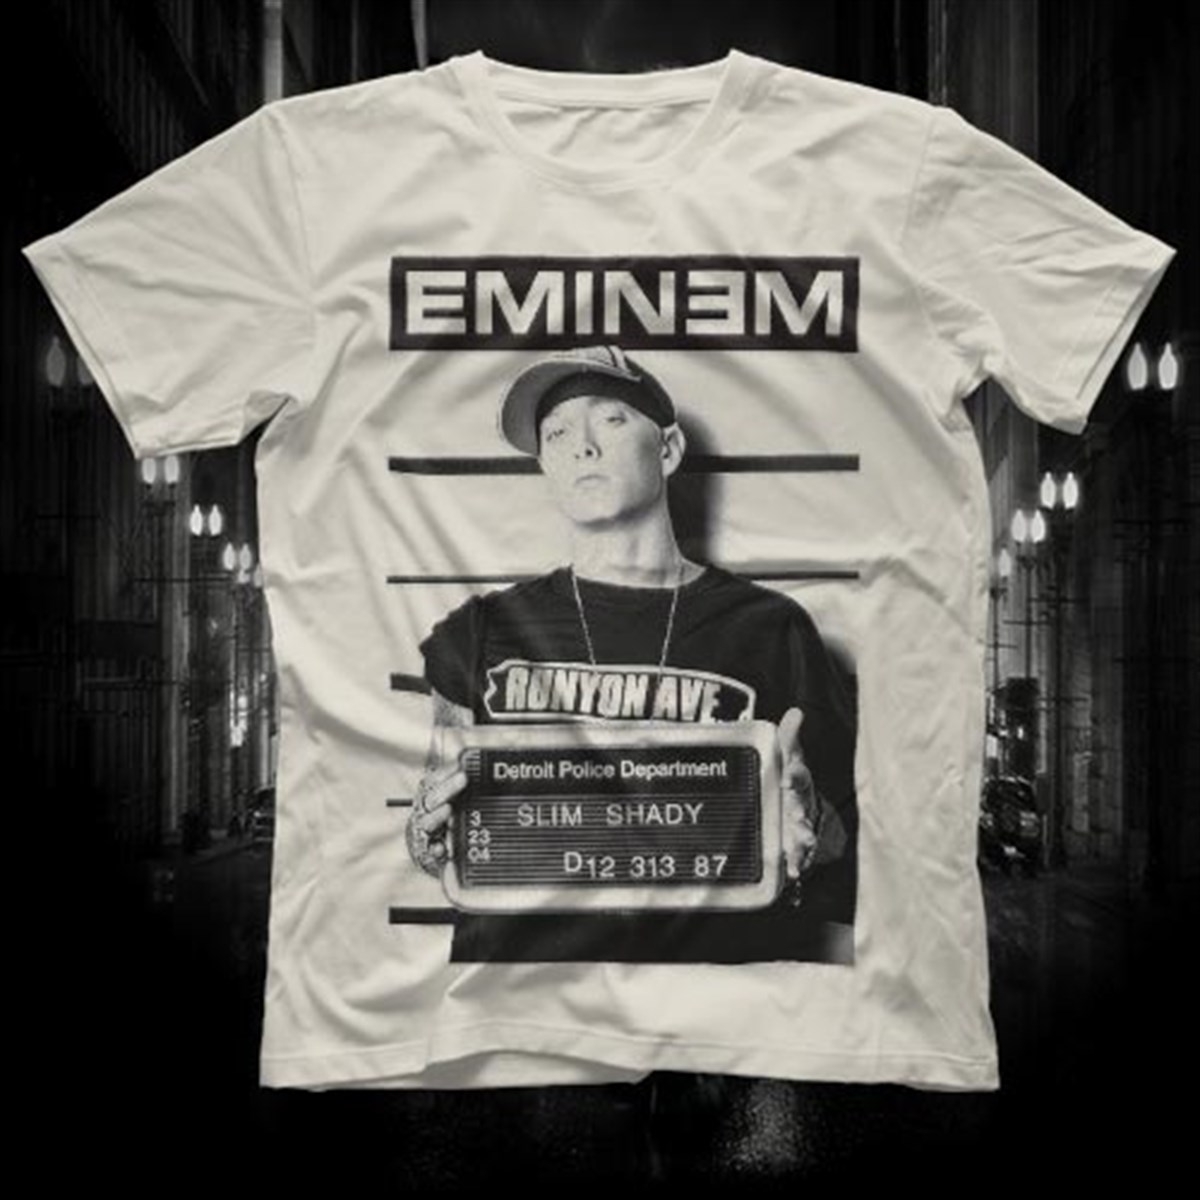 Eminem Beyaz T-Shirt GT01